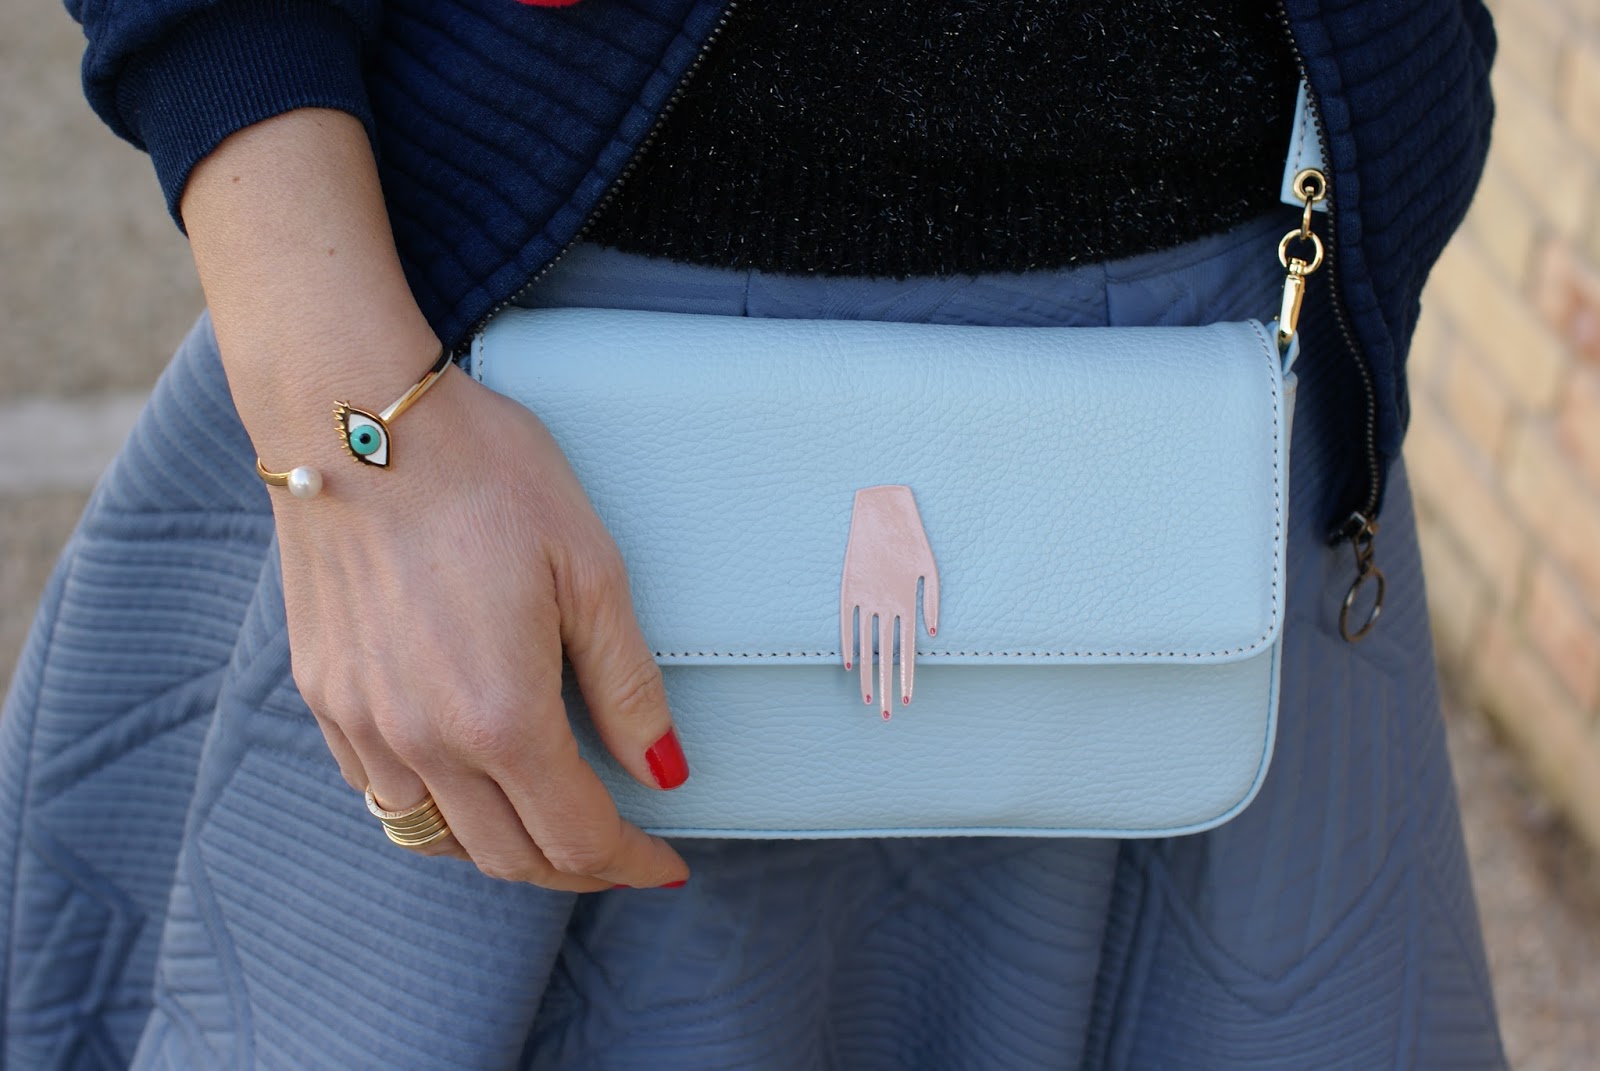 Lazzari bag for Jordan Grace Owens on Fashion and Cookies fashion blog, fashion blogger style